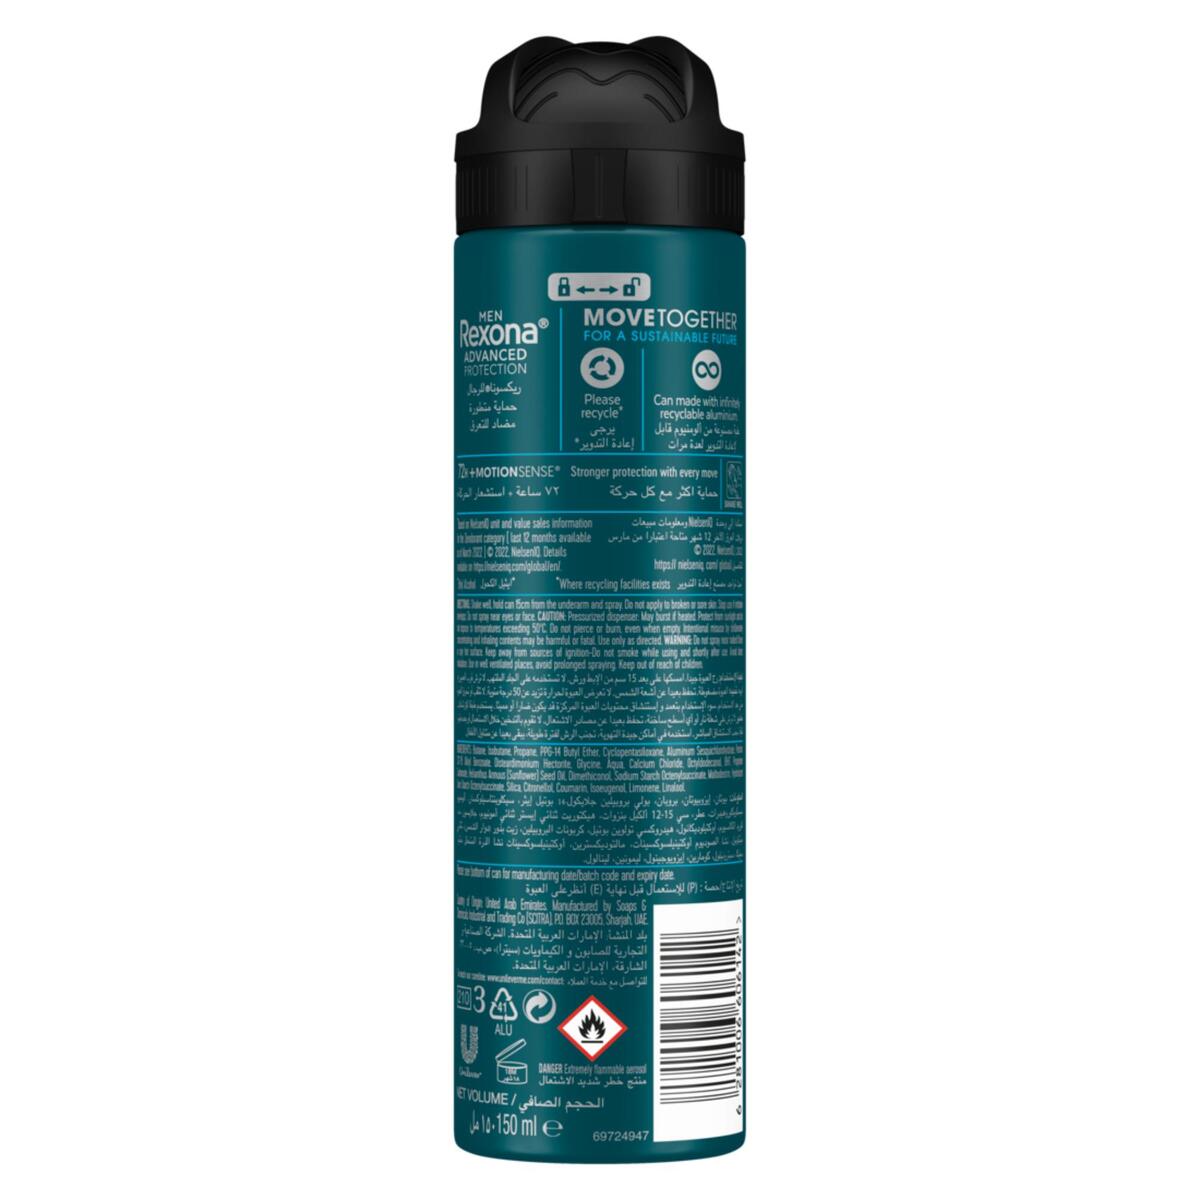 Rexona Men Antiperspirant Deodorant Invisible Black & White, 150 ml